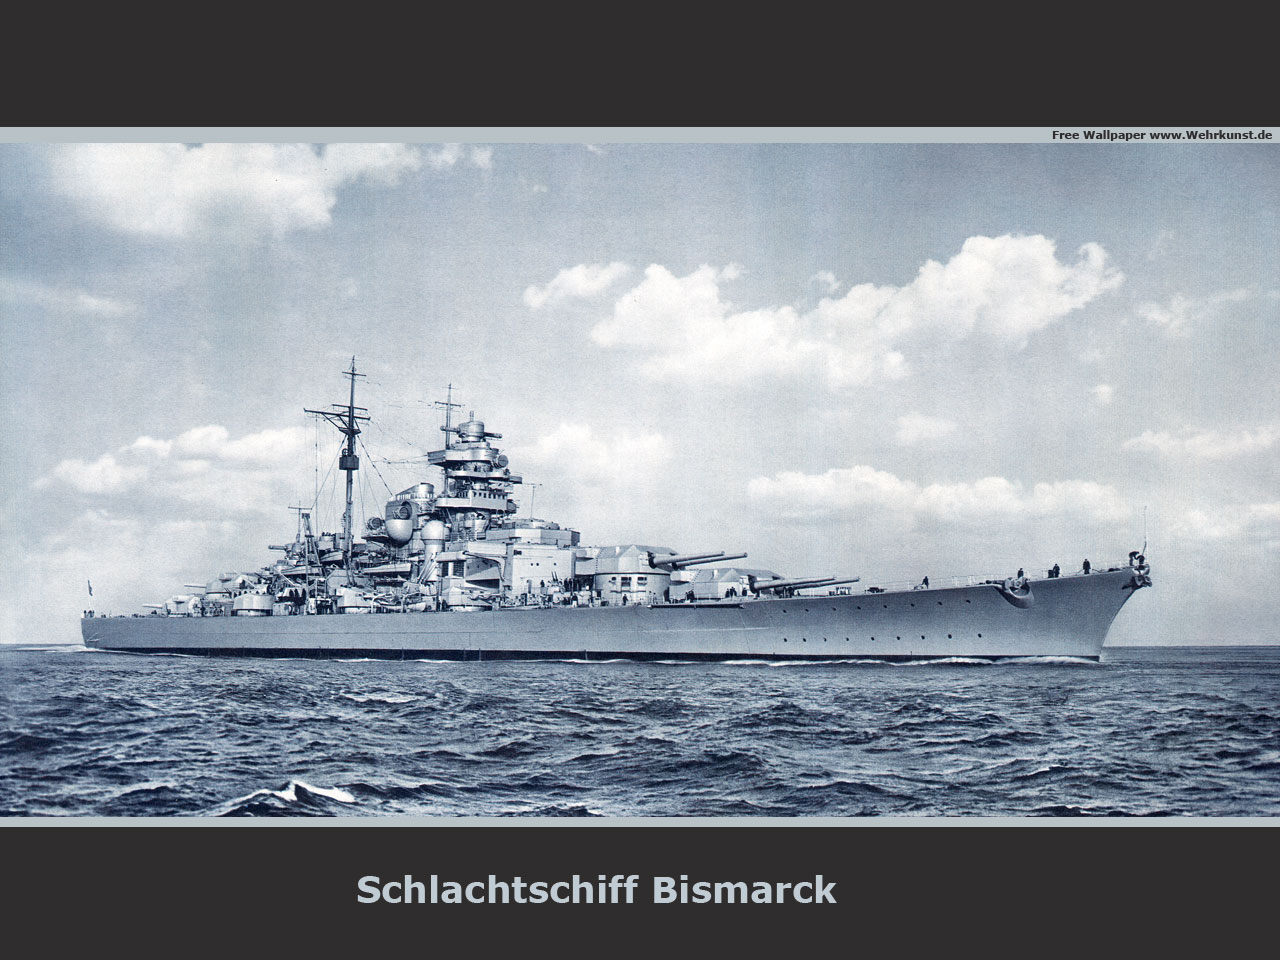 German Battleship Bismarck by achmedthedeadteroris on